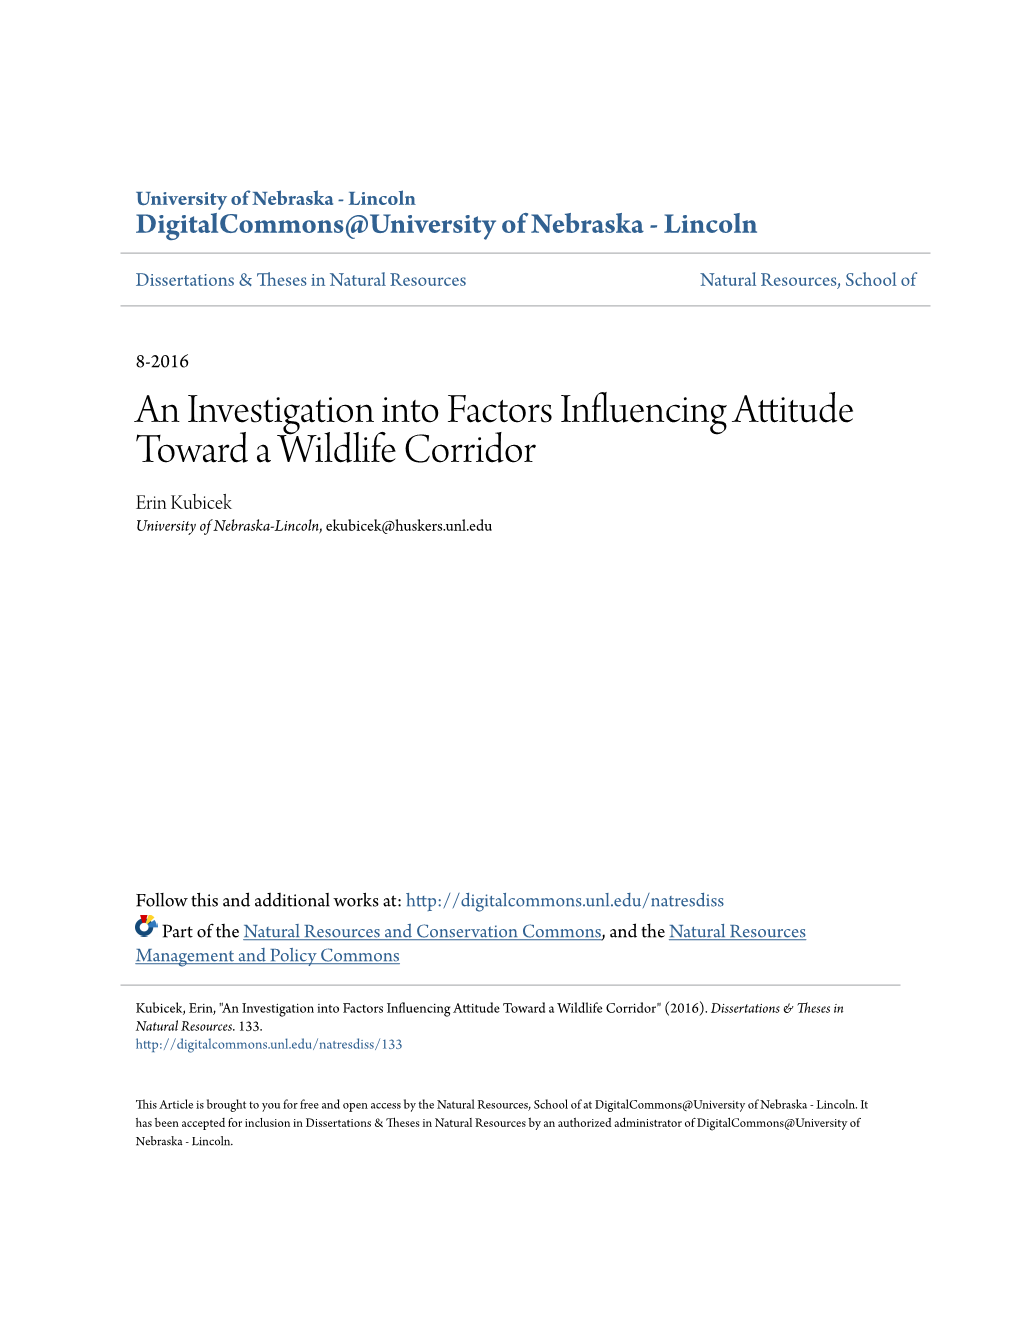 An Investigation Into Factors Influencing Attitude Toward a Wildlife Corridor Erin Kubicek University of Nebraska-Lincoln, Ekubicek@Huskers.Unl.Edu